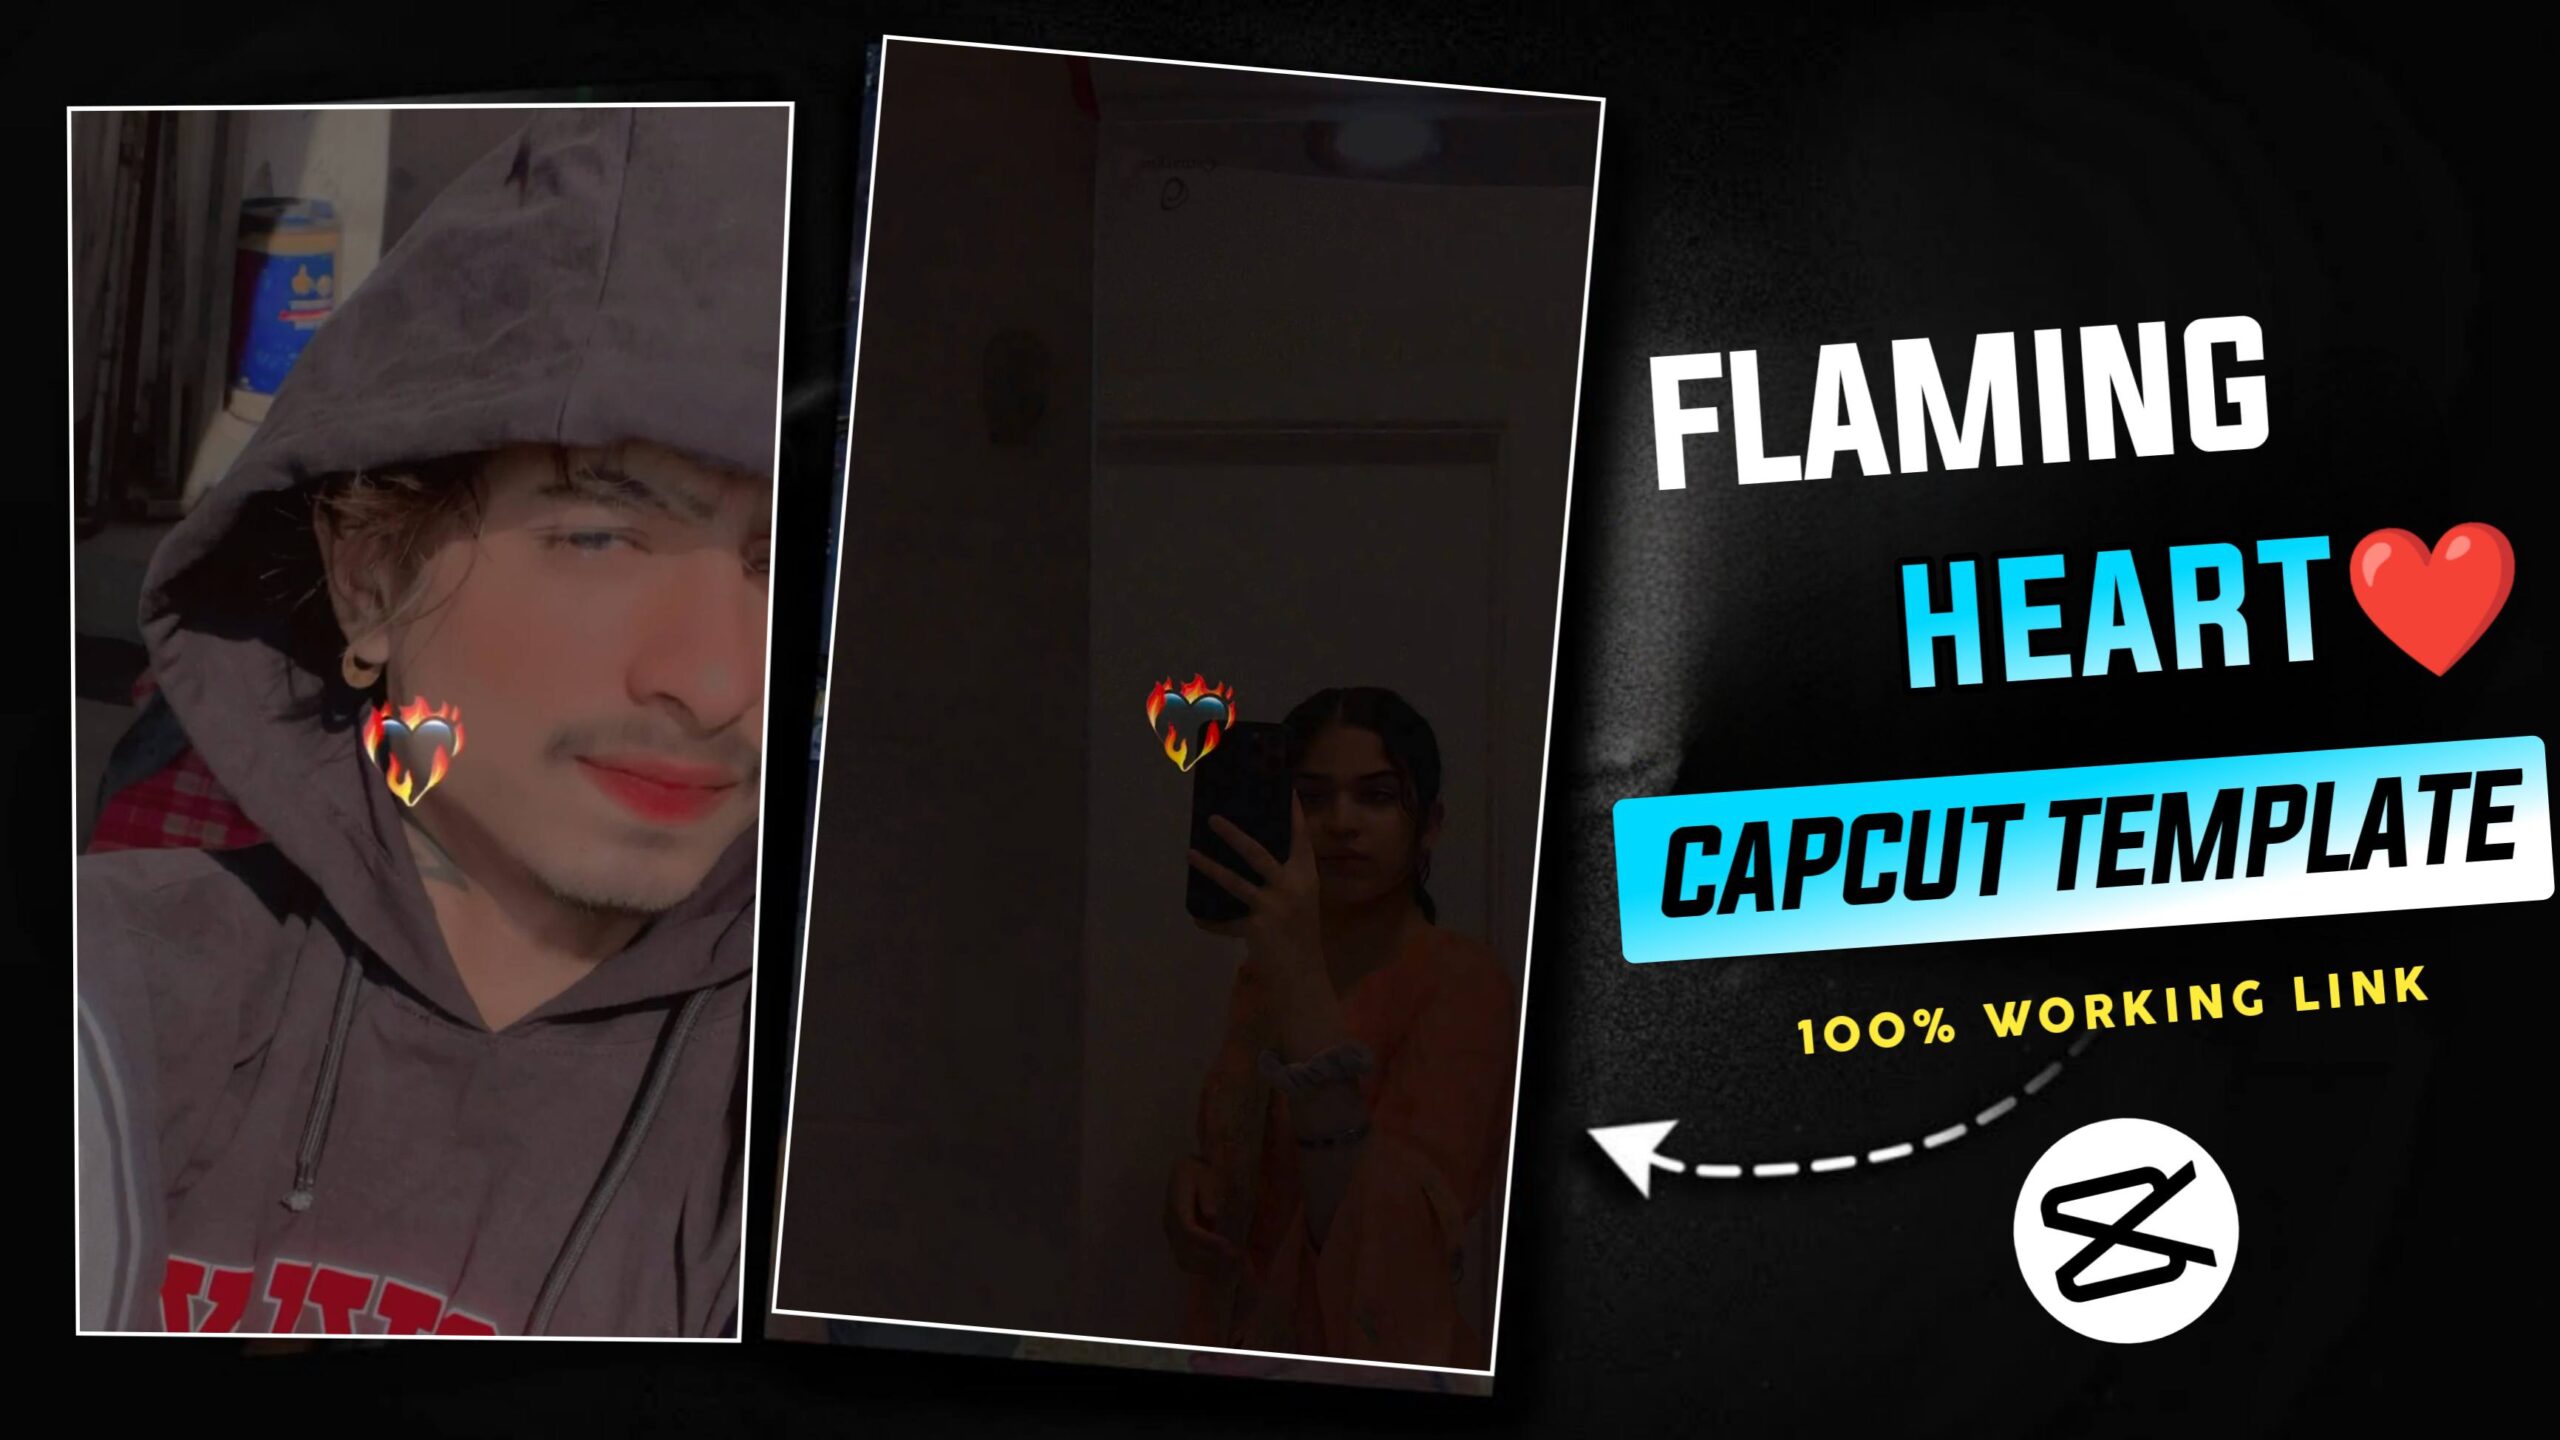 Flaming Heart CapCut Template